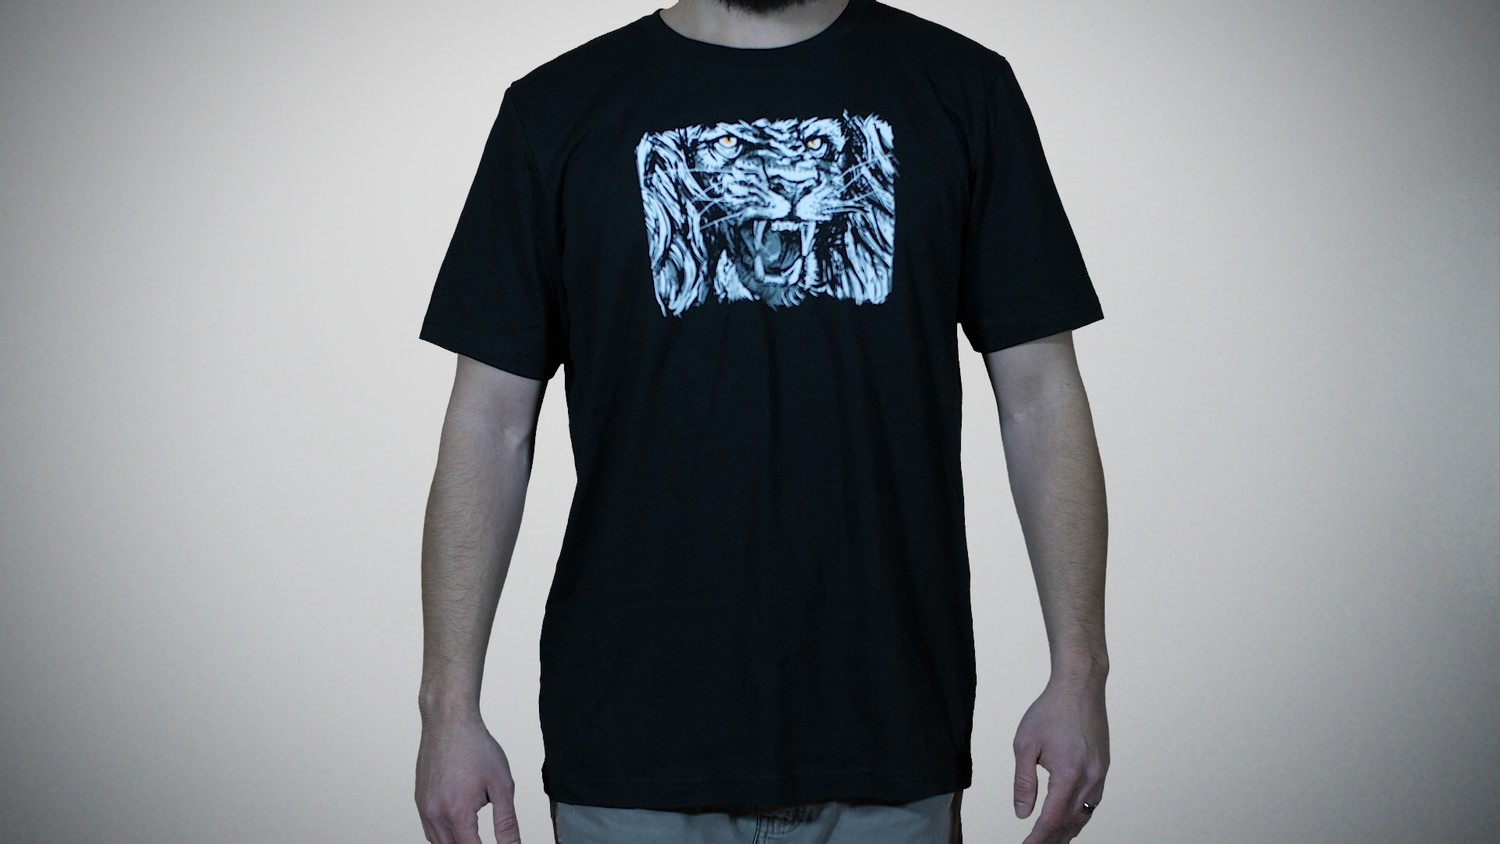 "Be A Lion" t-shirt